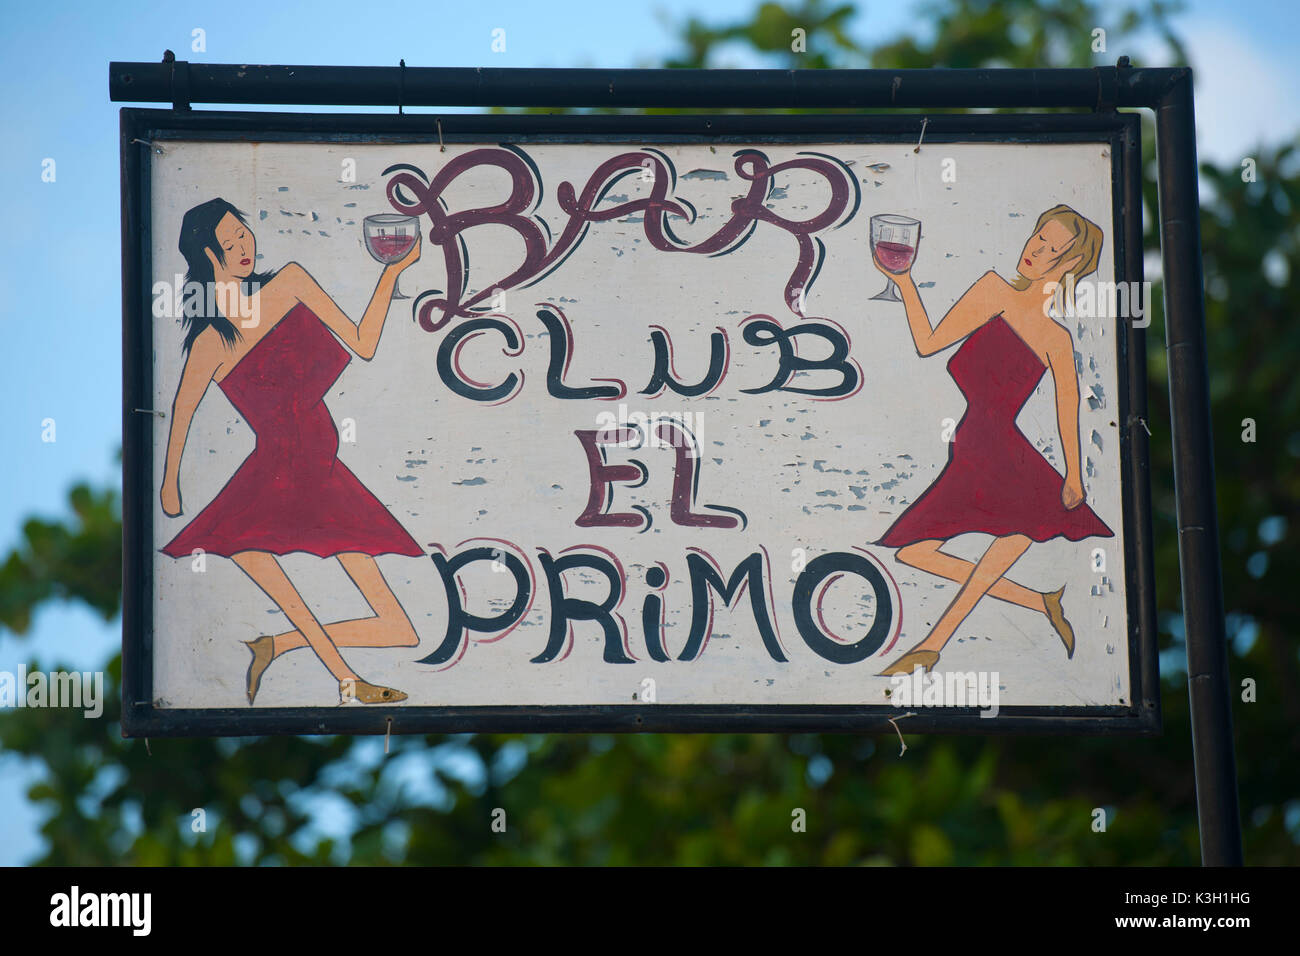 The Dominican Republic, peninsula Samana, los Galeras, bar sign 'Club tablespoon of Primo' Stock Photo